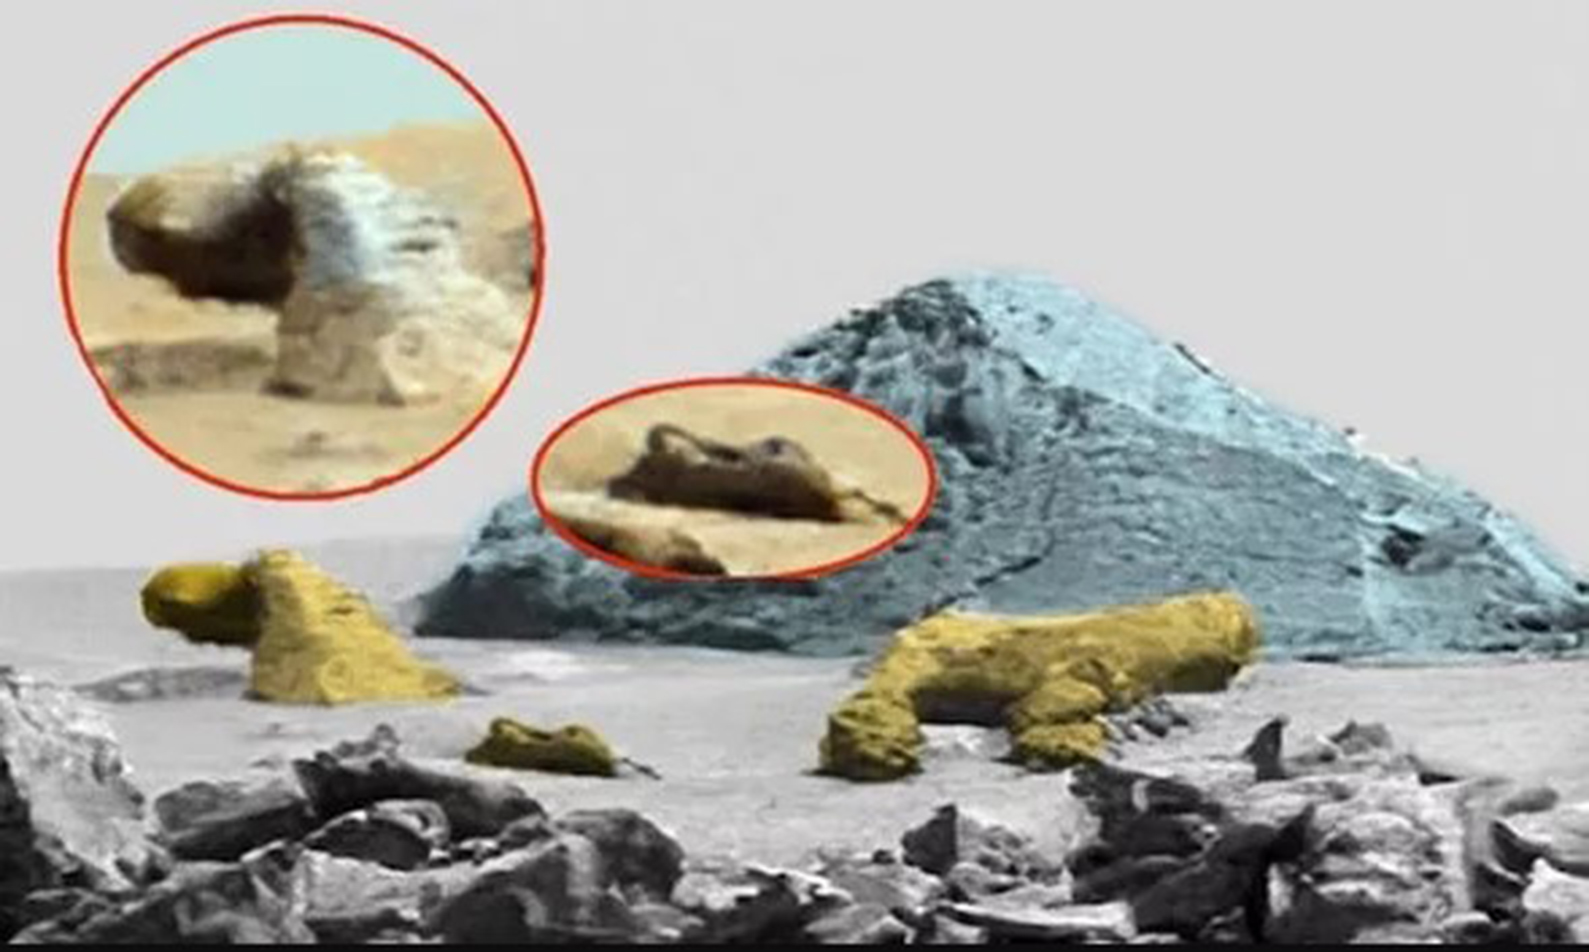 Discover found out. Скотт Уоринг. Скотт Уоринг пирамида. Пирамида на Марсе лицо сфинкса. Снимки Марса Скотт Уоринг.